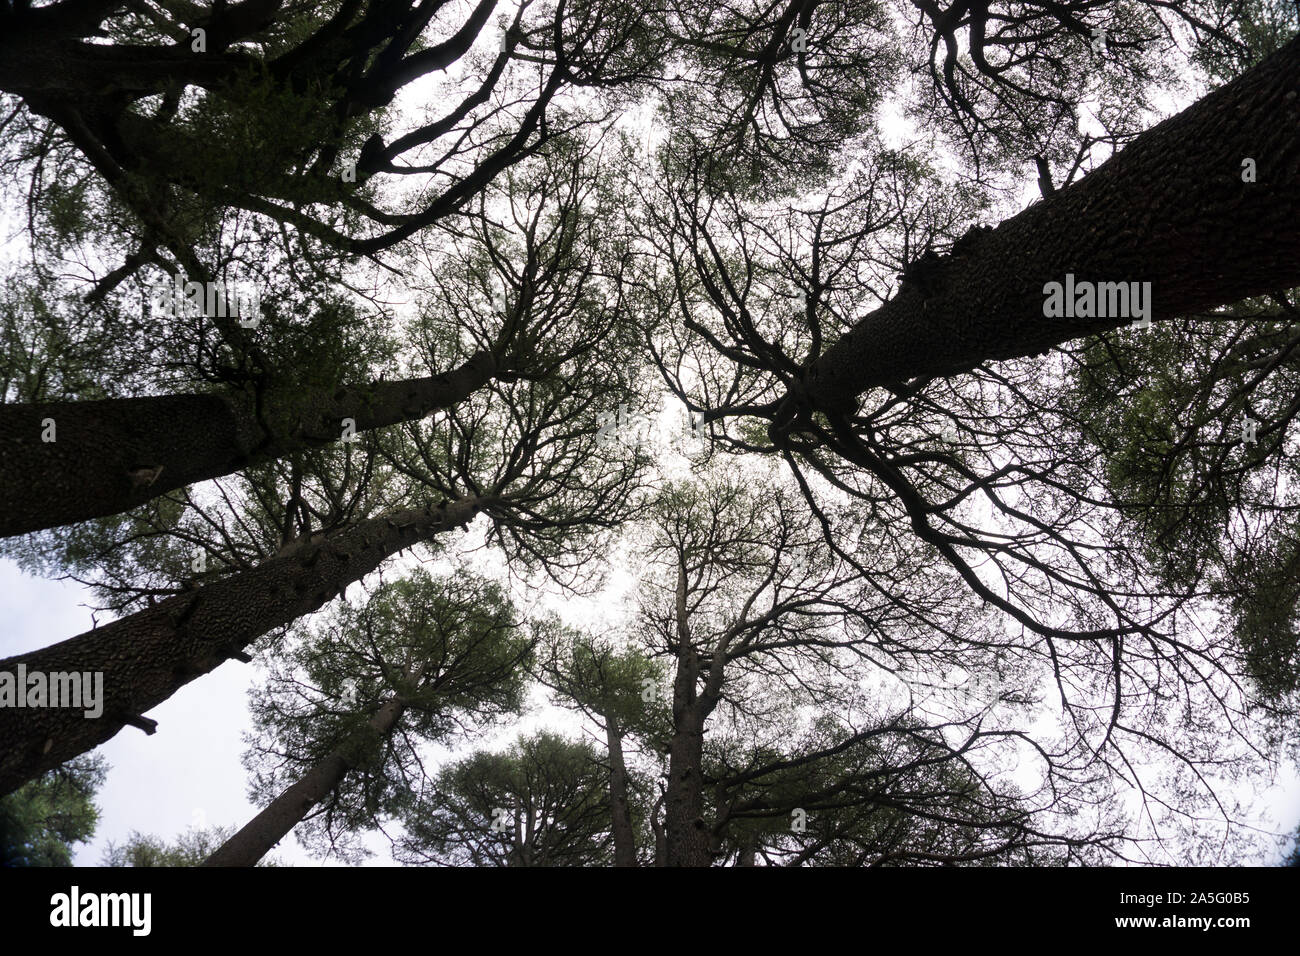 The Cedars of Lebanon Stock Photo